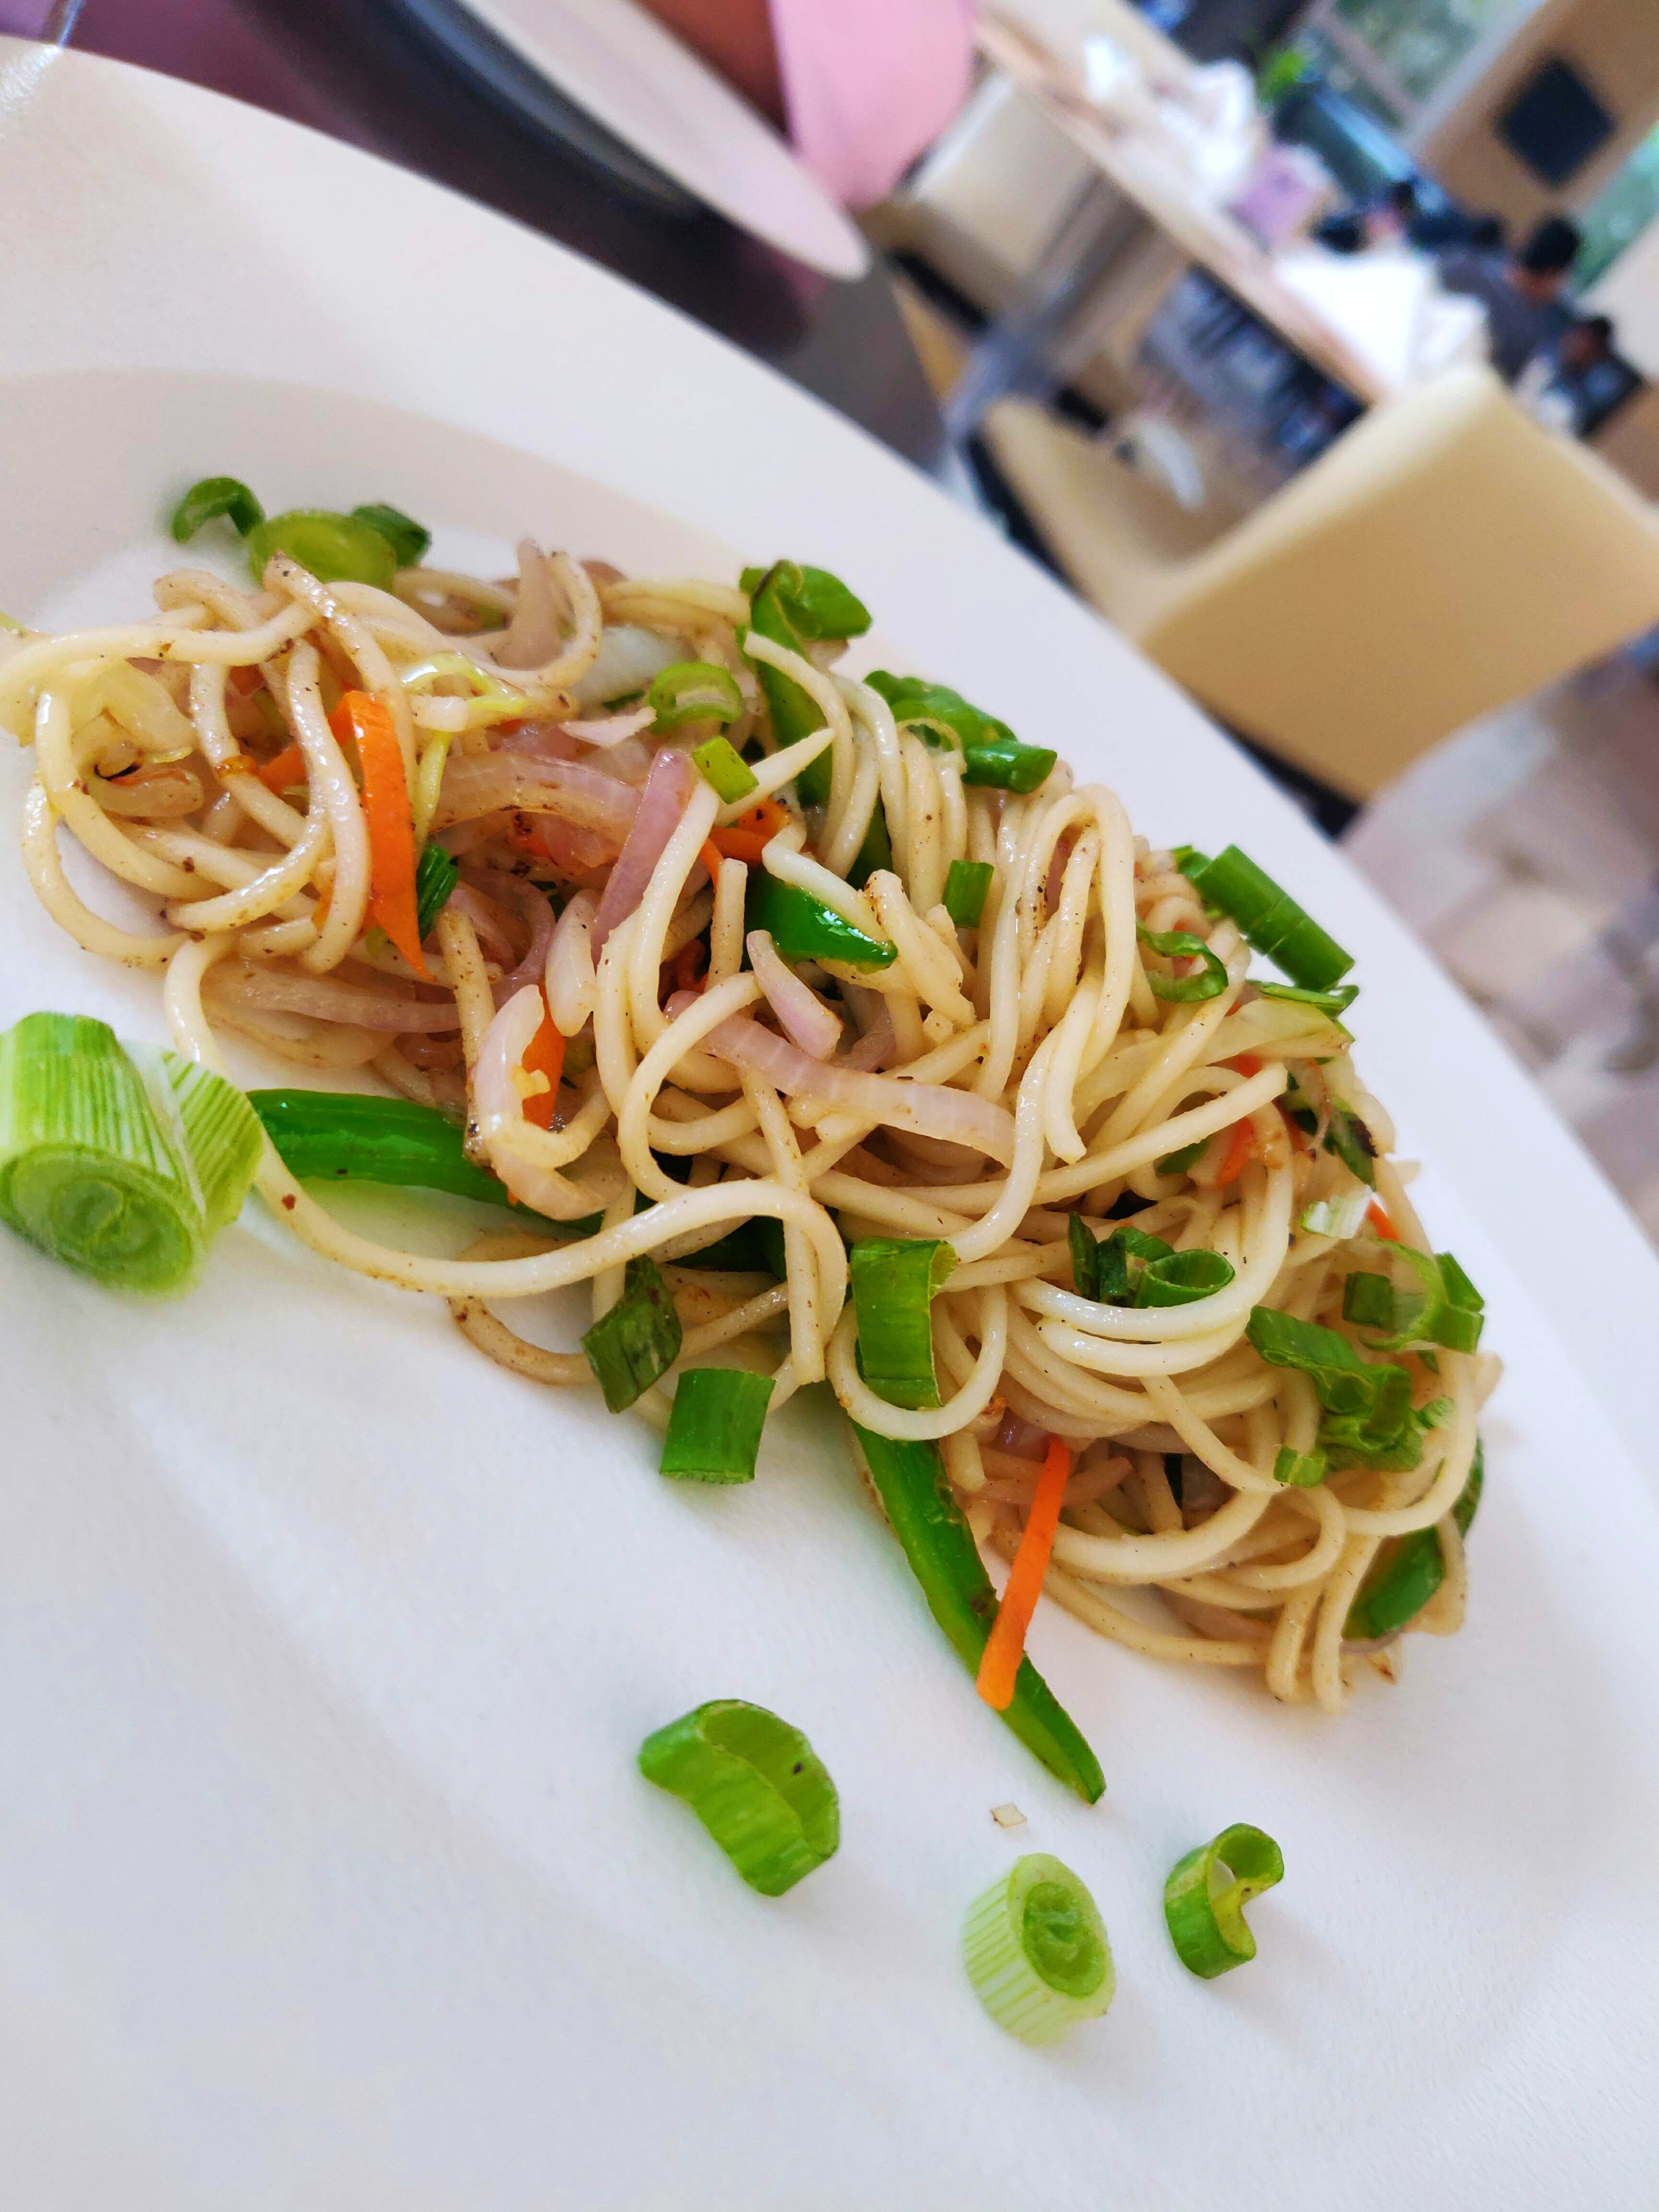 Dish,Cuisine,Food,Pad thai,Noodle,Ingredient,Spaghetti,Chow mein,Capellini,Shirataki noodles